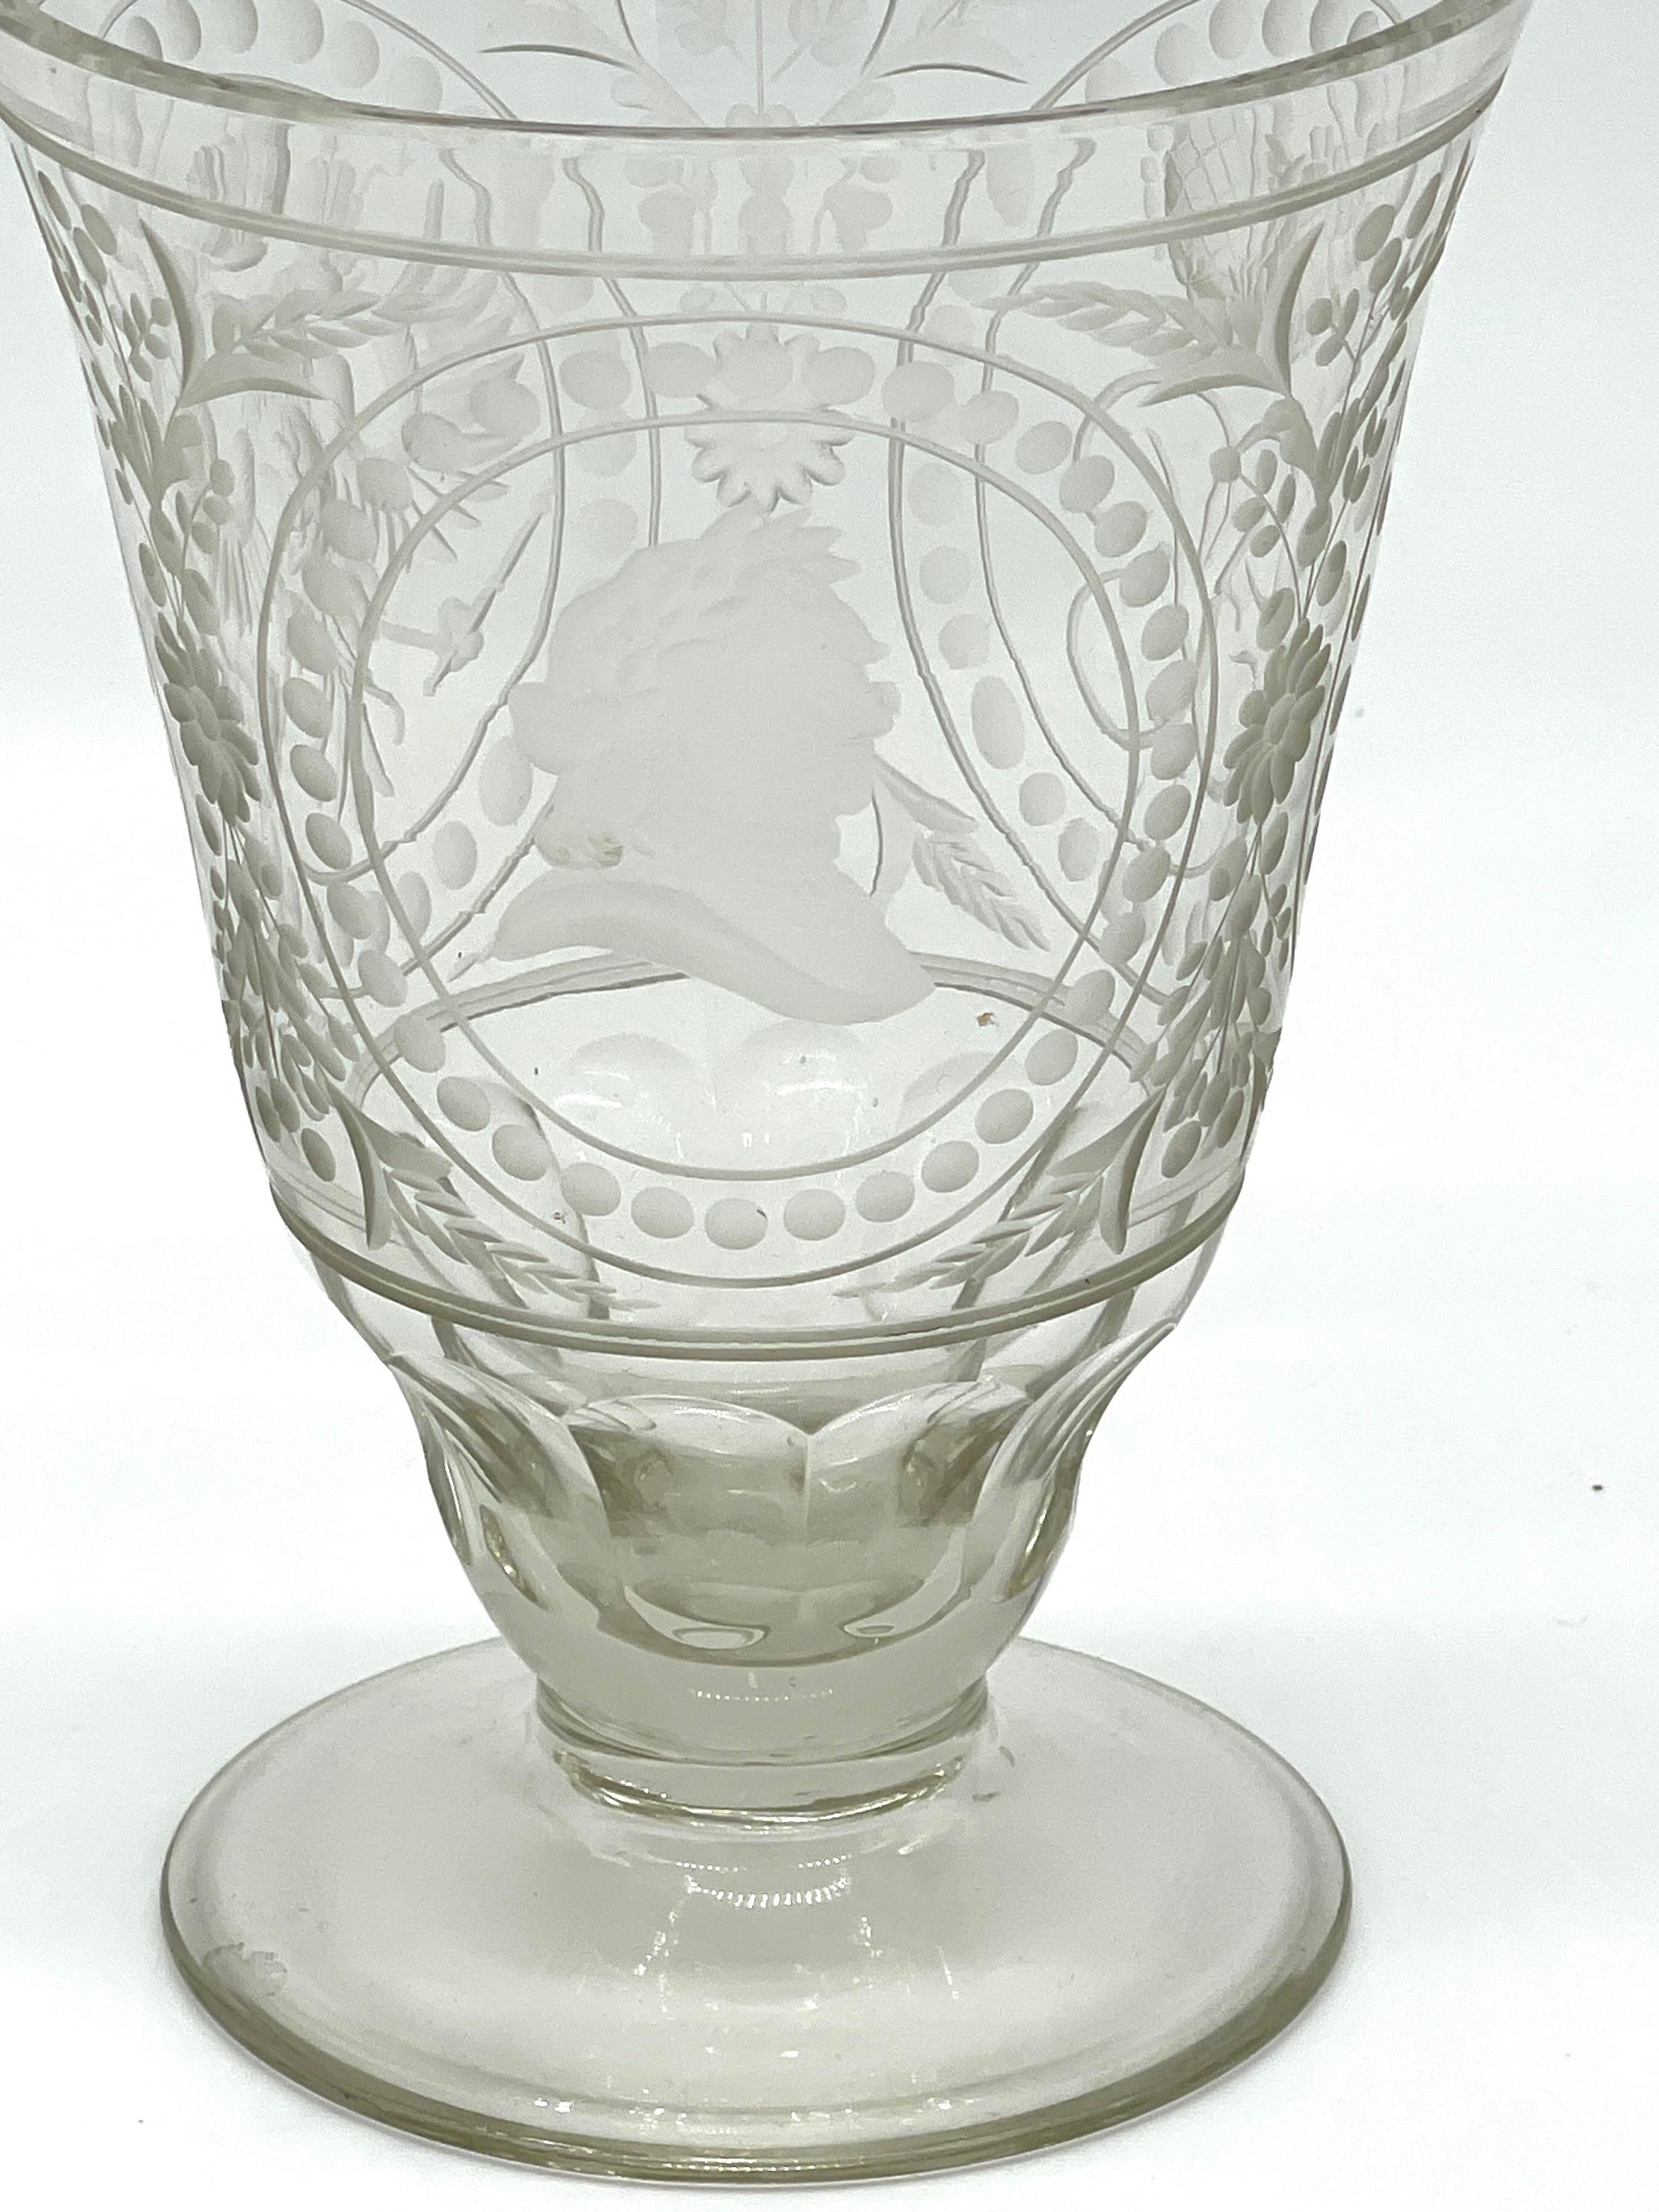 Russian Engraved Crystal Beaker, Commemorative of Alexander I, 